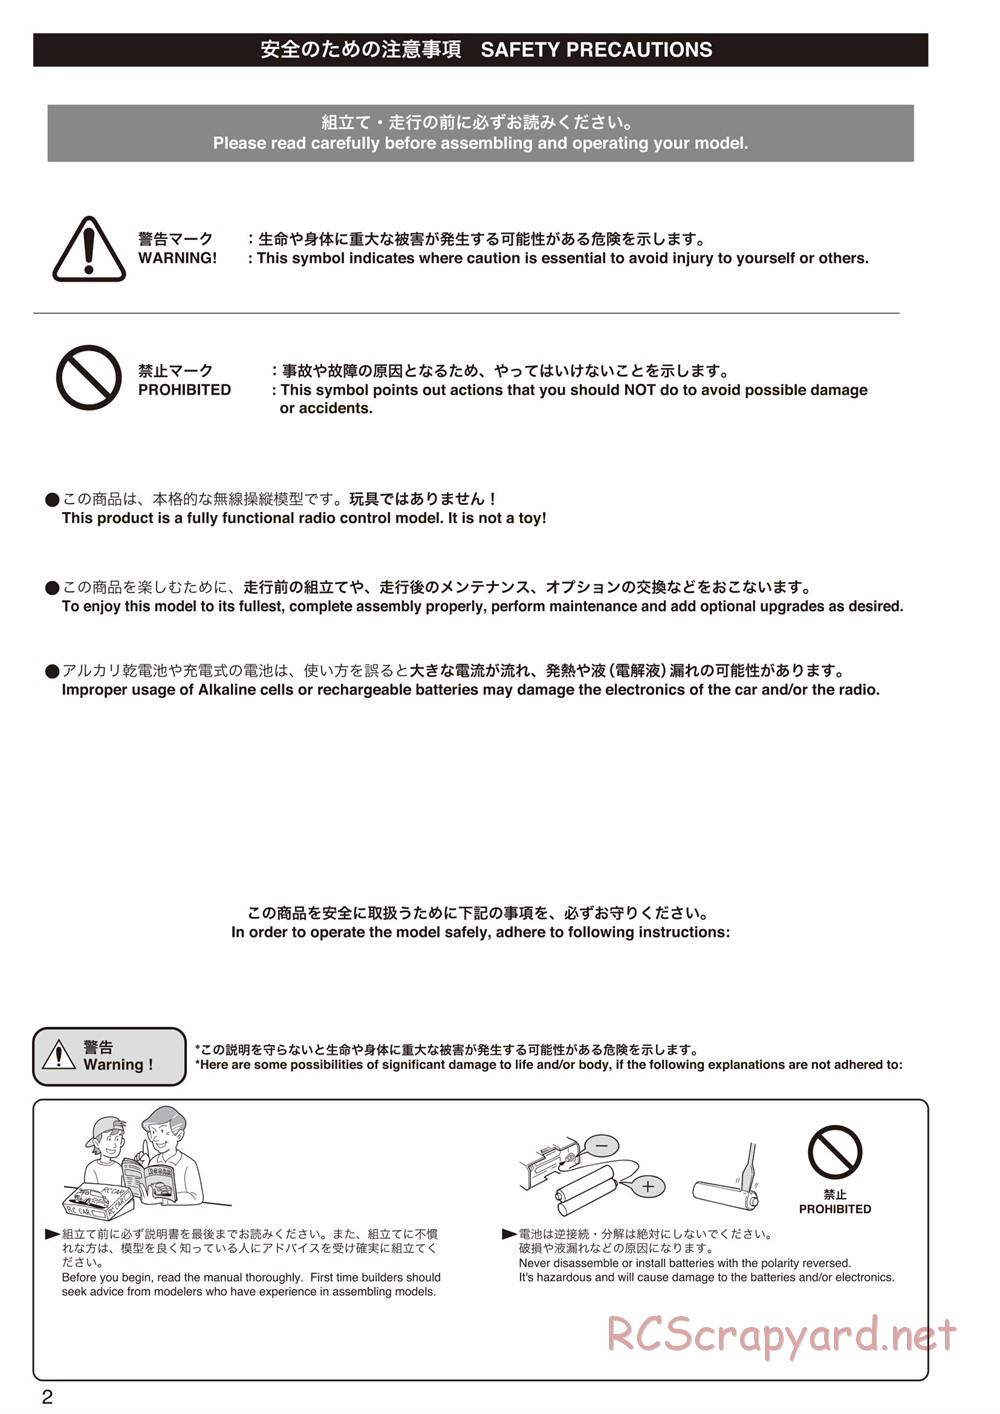 Kyosho - Inferno MP9 TKI4 - Manual - Page 2